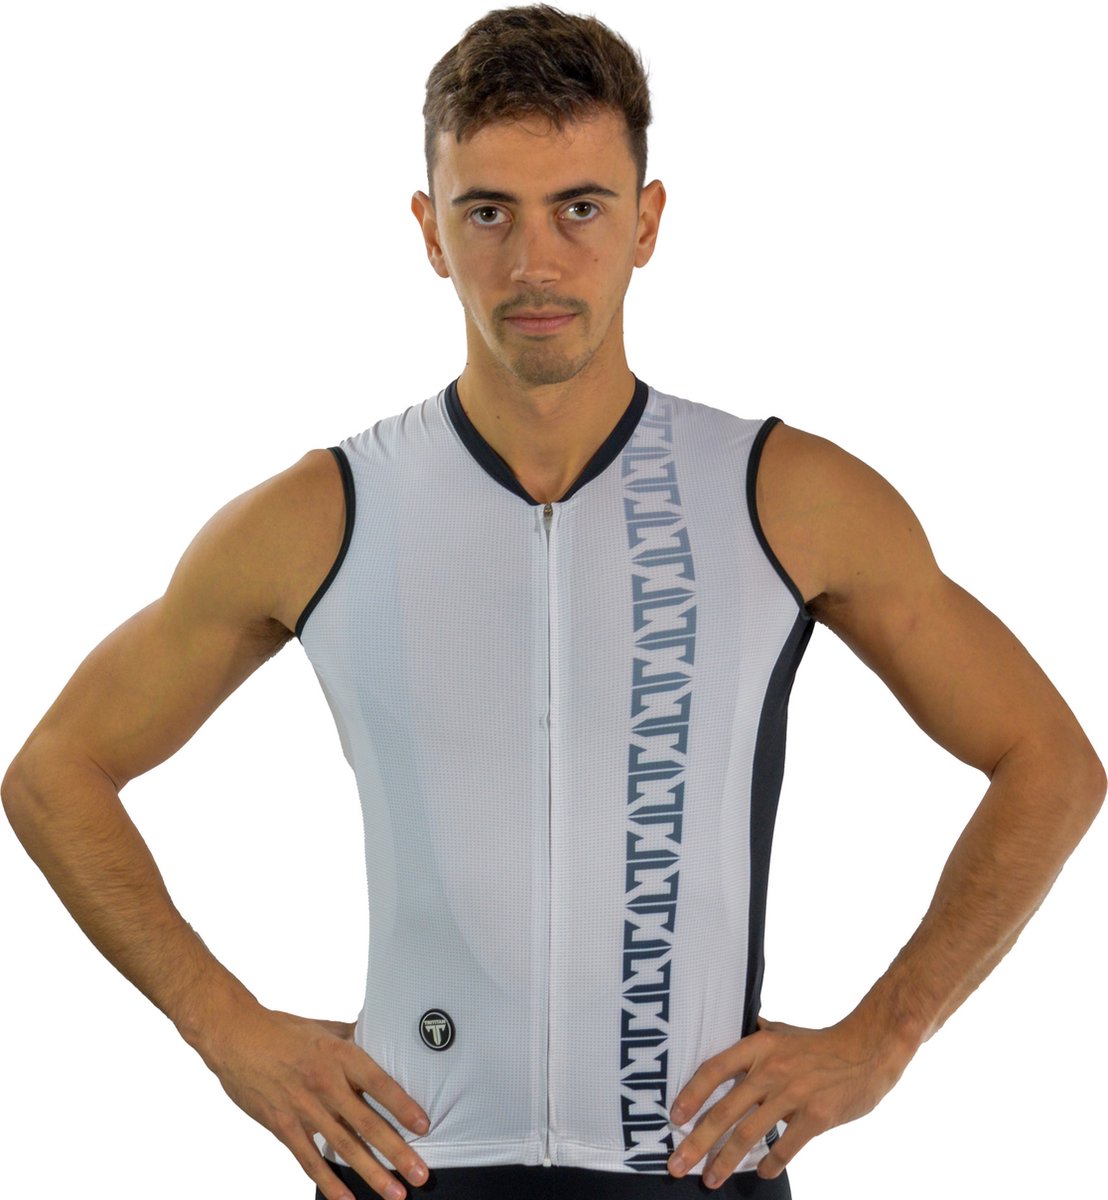 TriTiTan Titanium Male Pro No Sleeve Cycling Jersey - Fietsshirt - Fietstrui - S